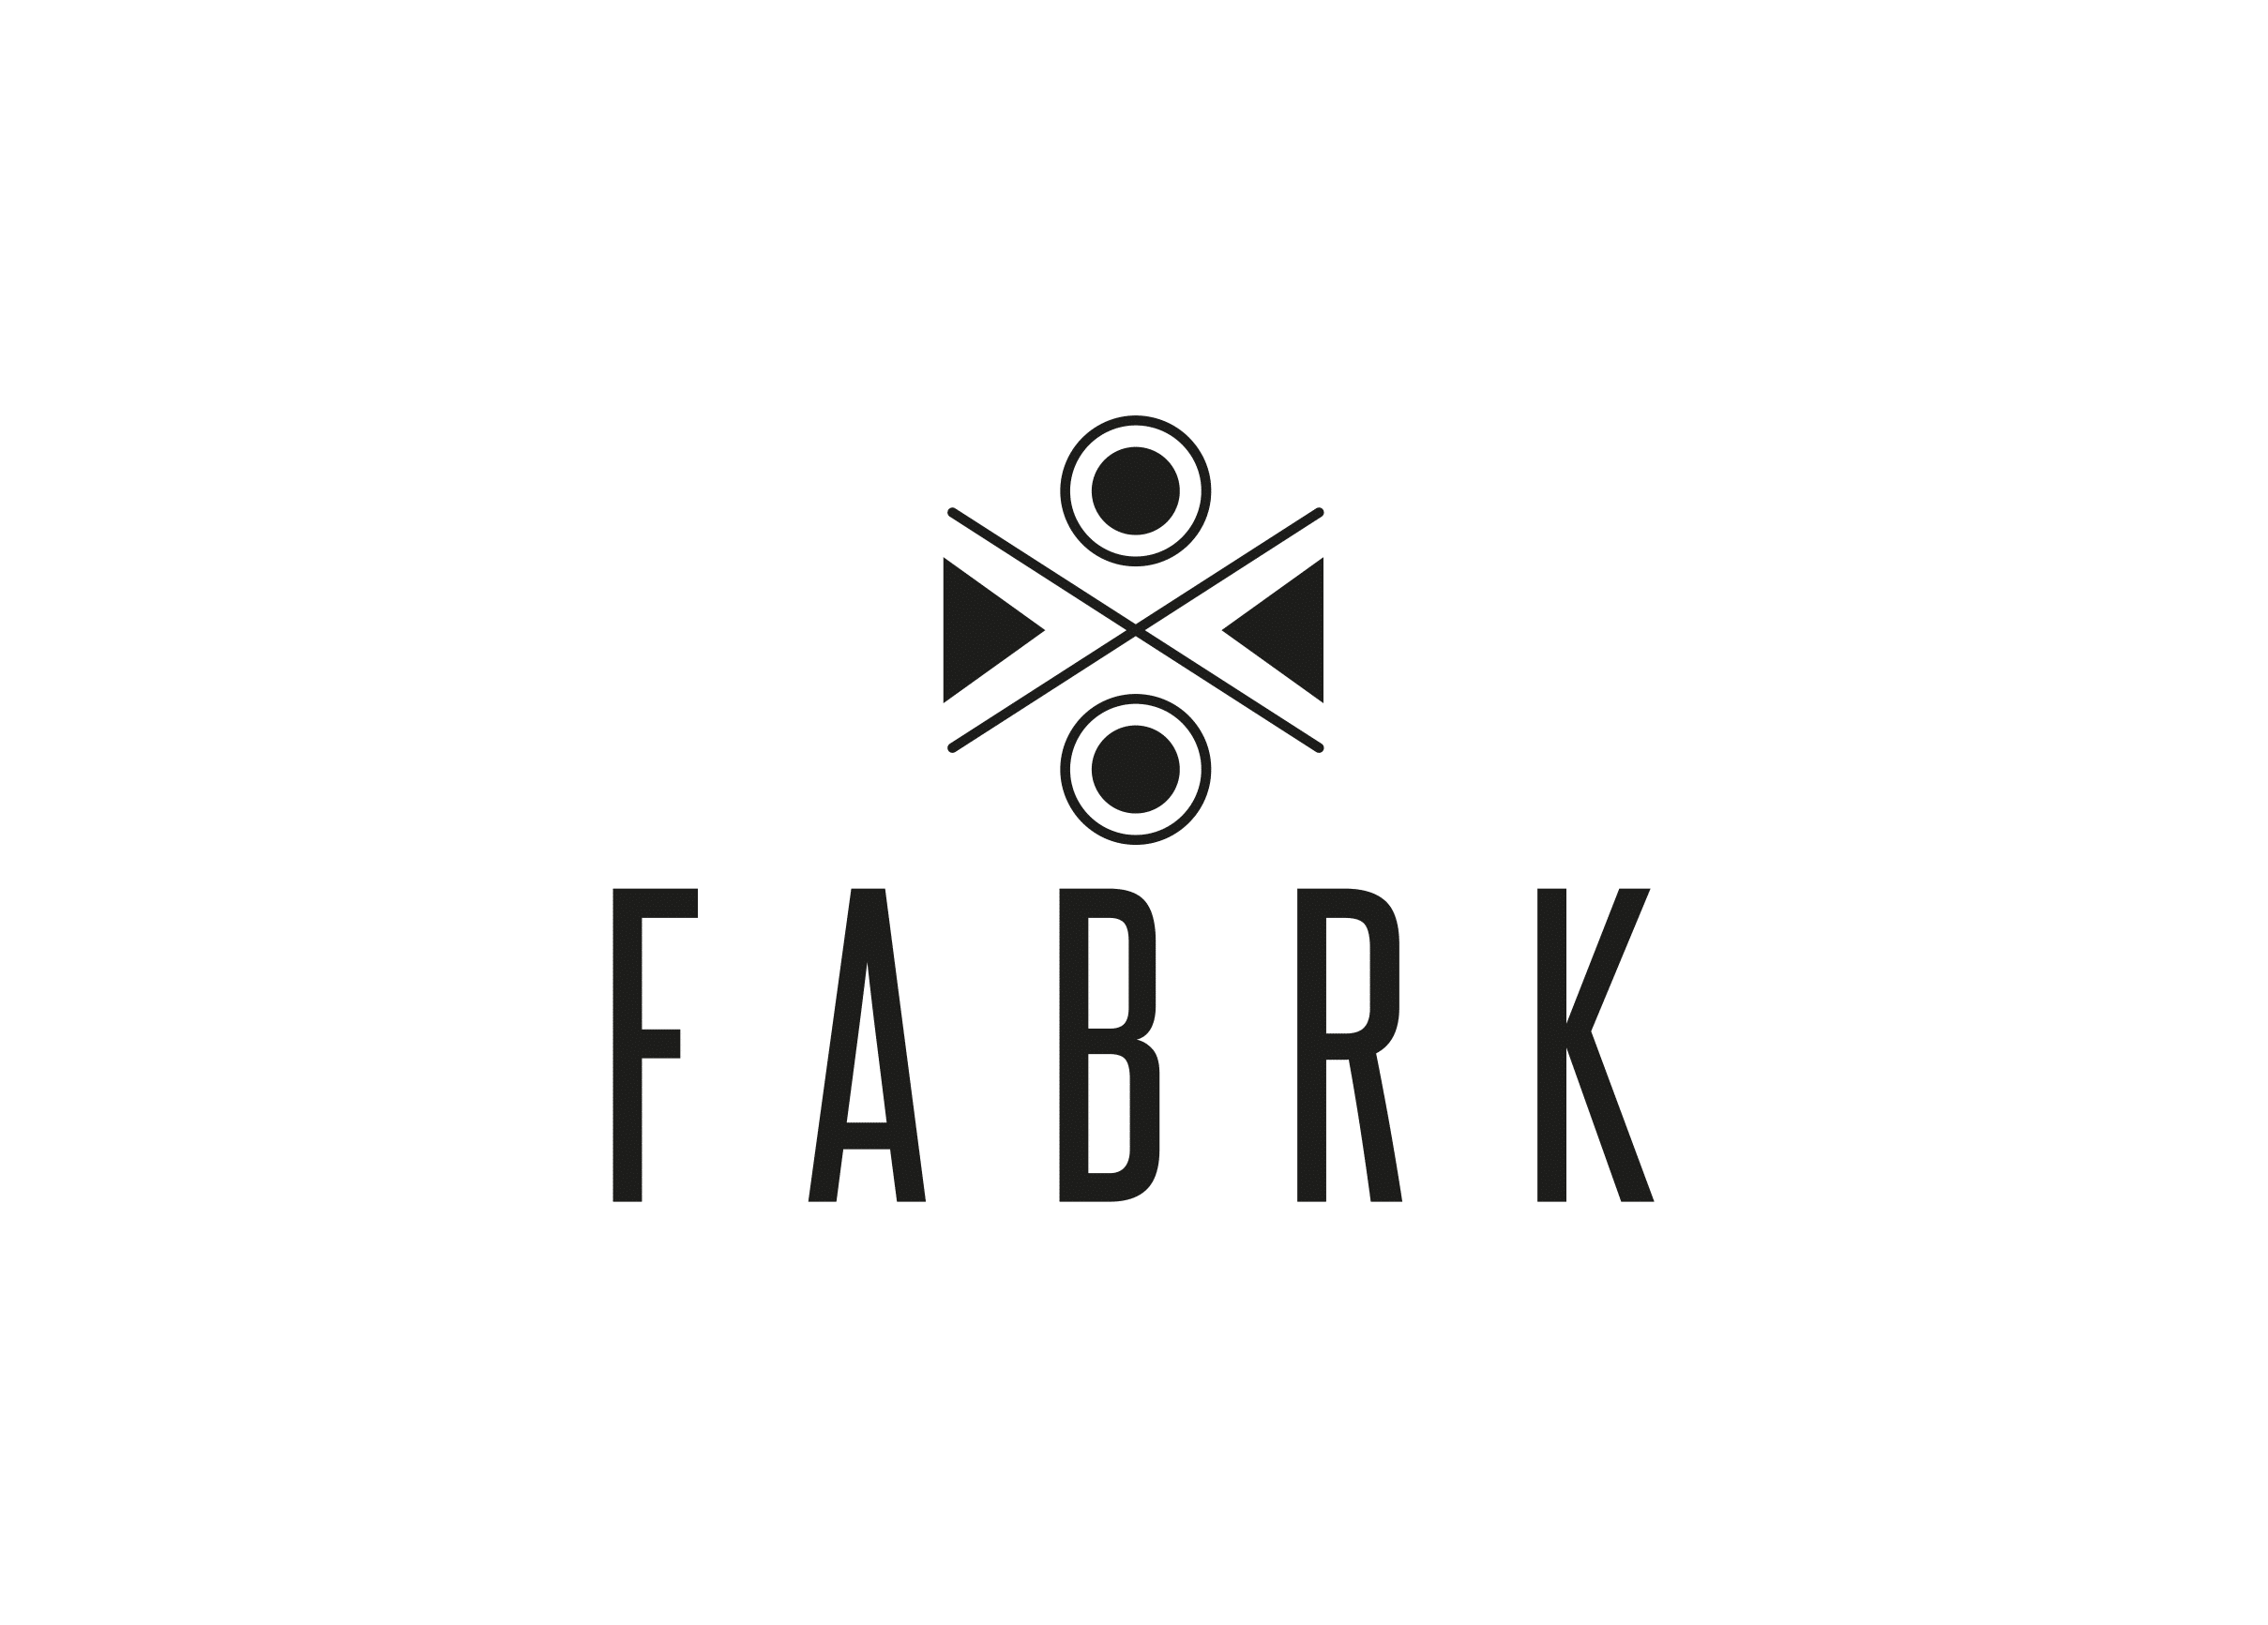   Save the Night Training - Fabrk